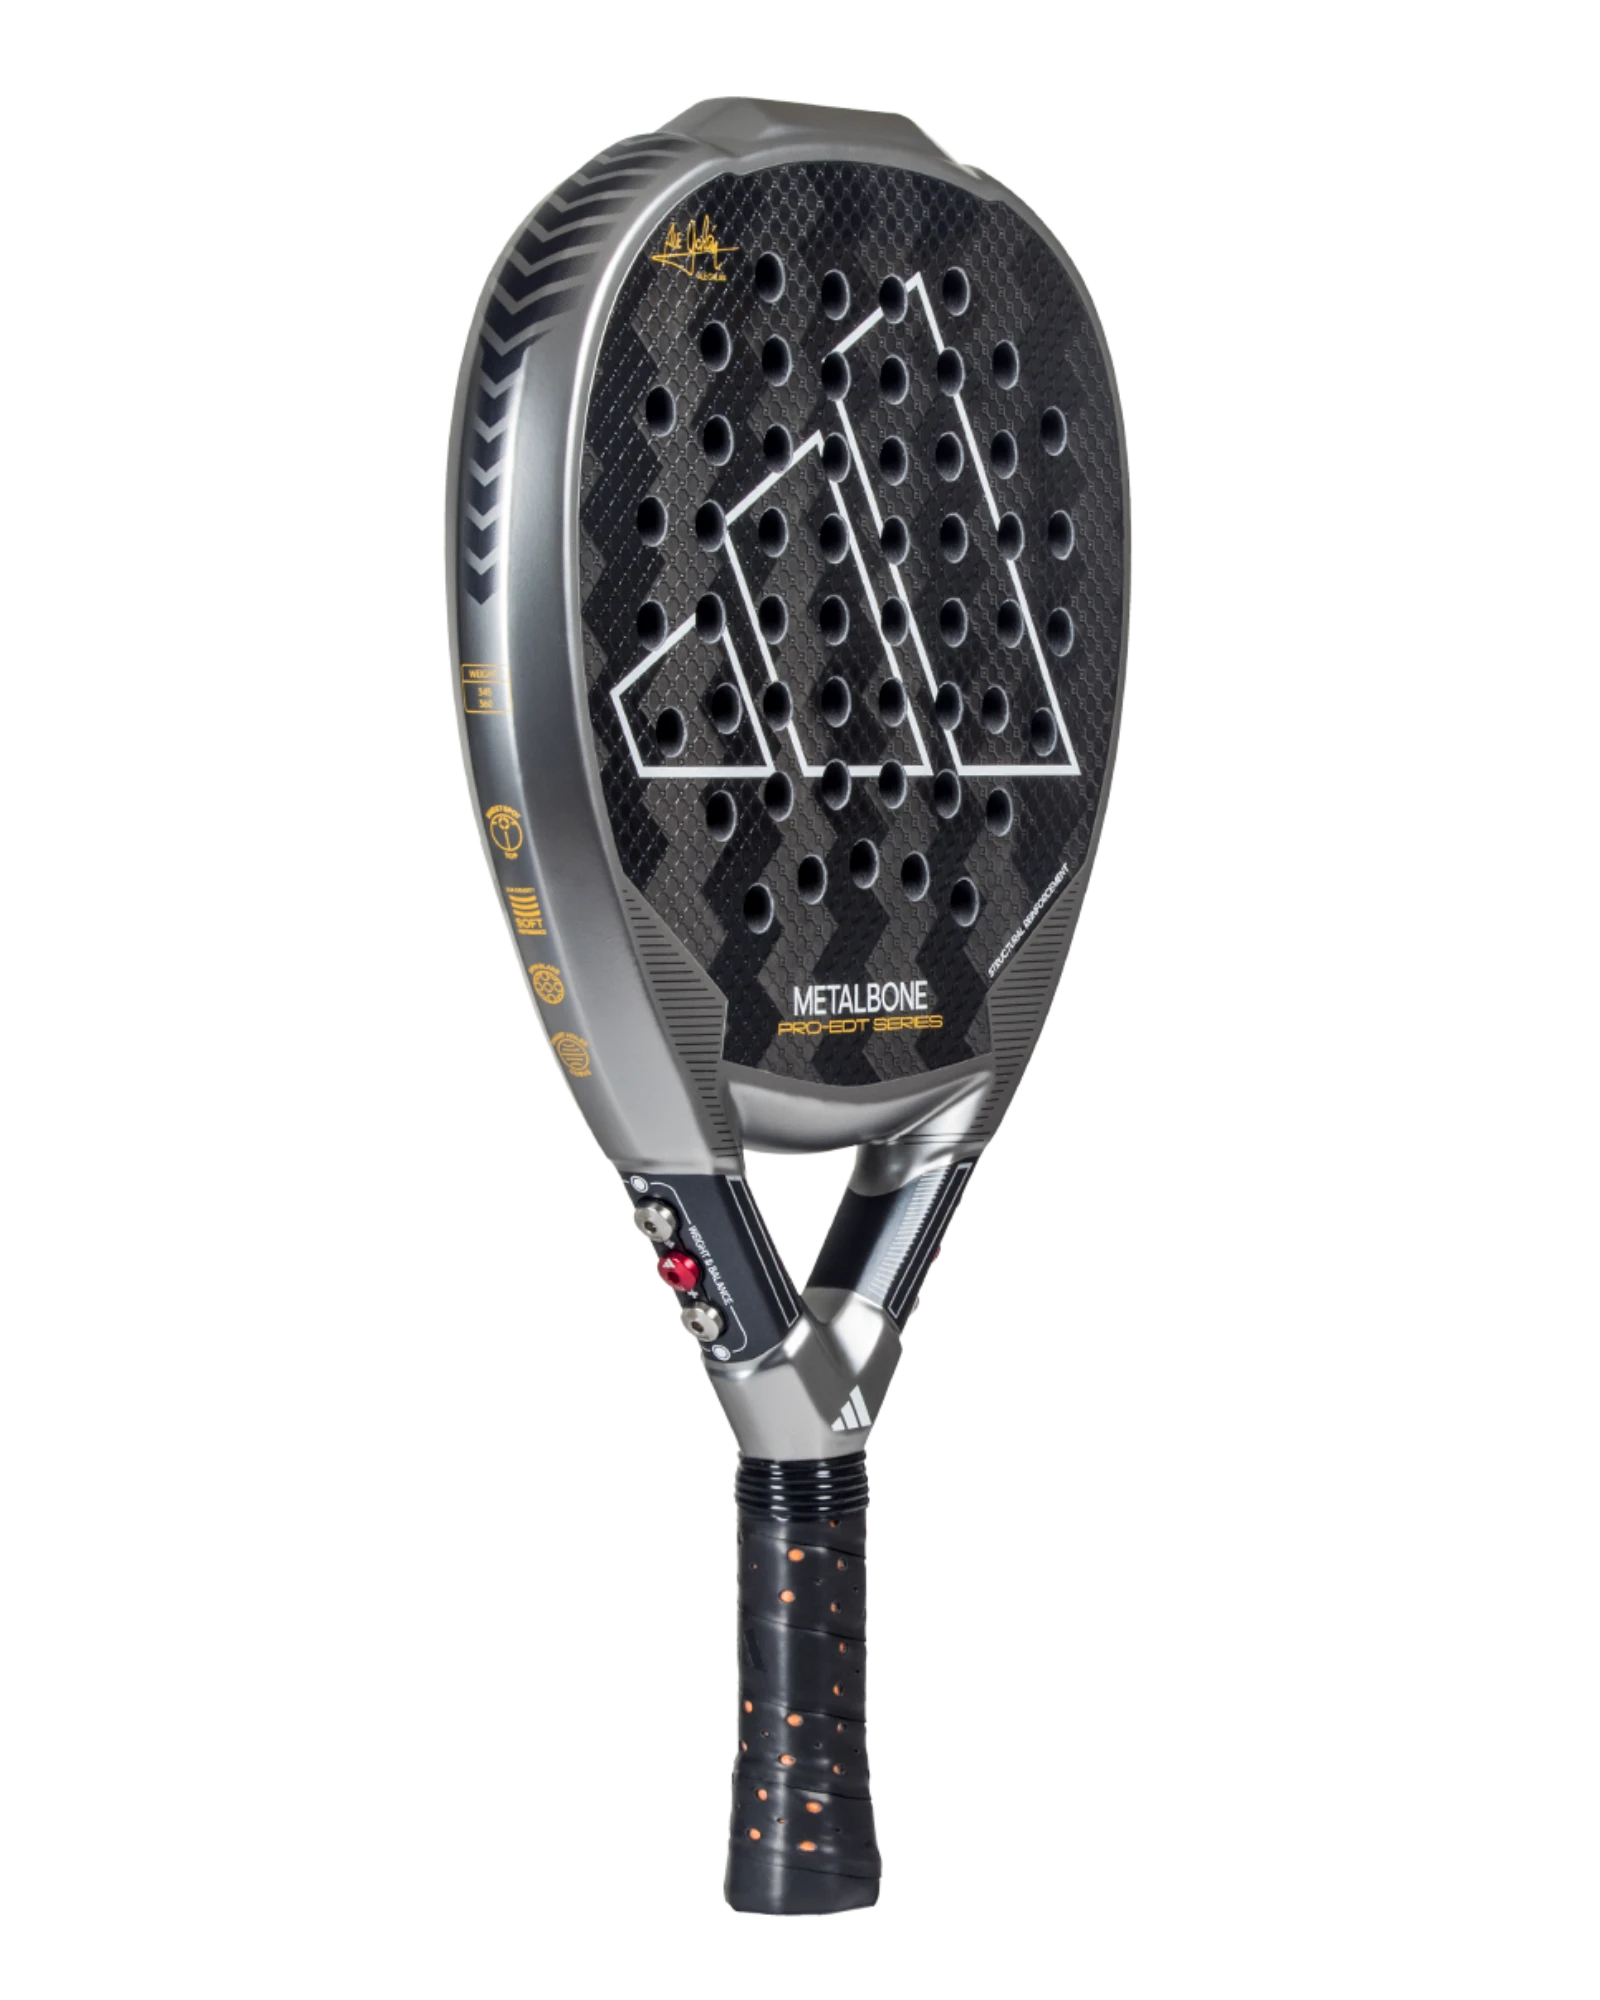 The Adidas Metalbone PRO EDT 2024 Padel Racket